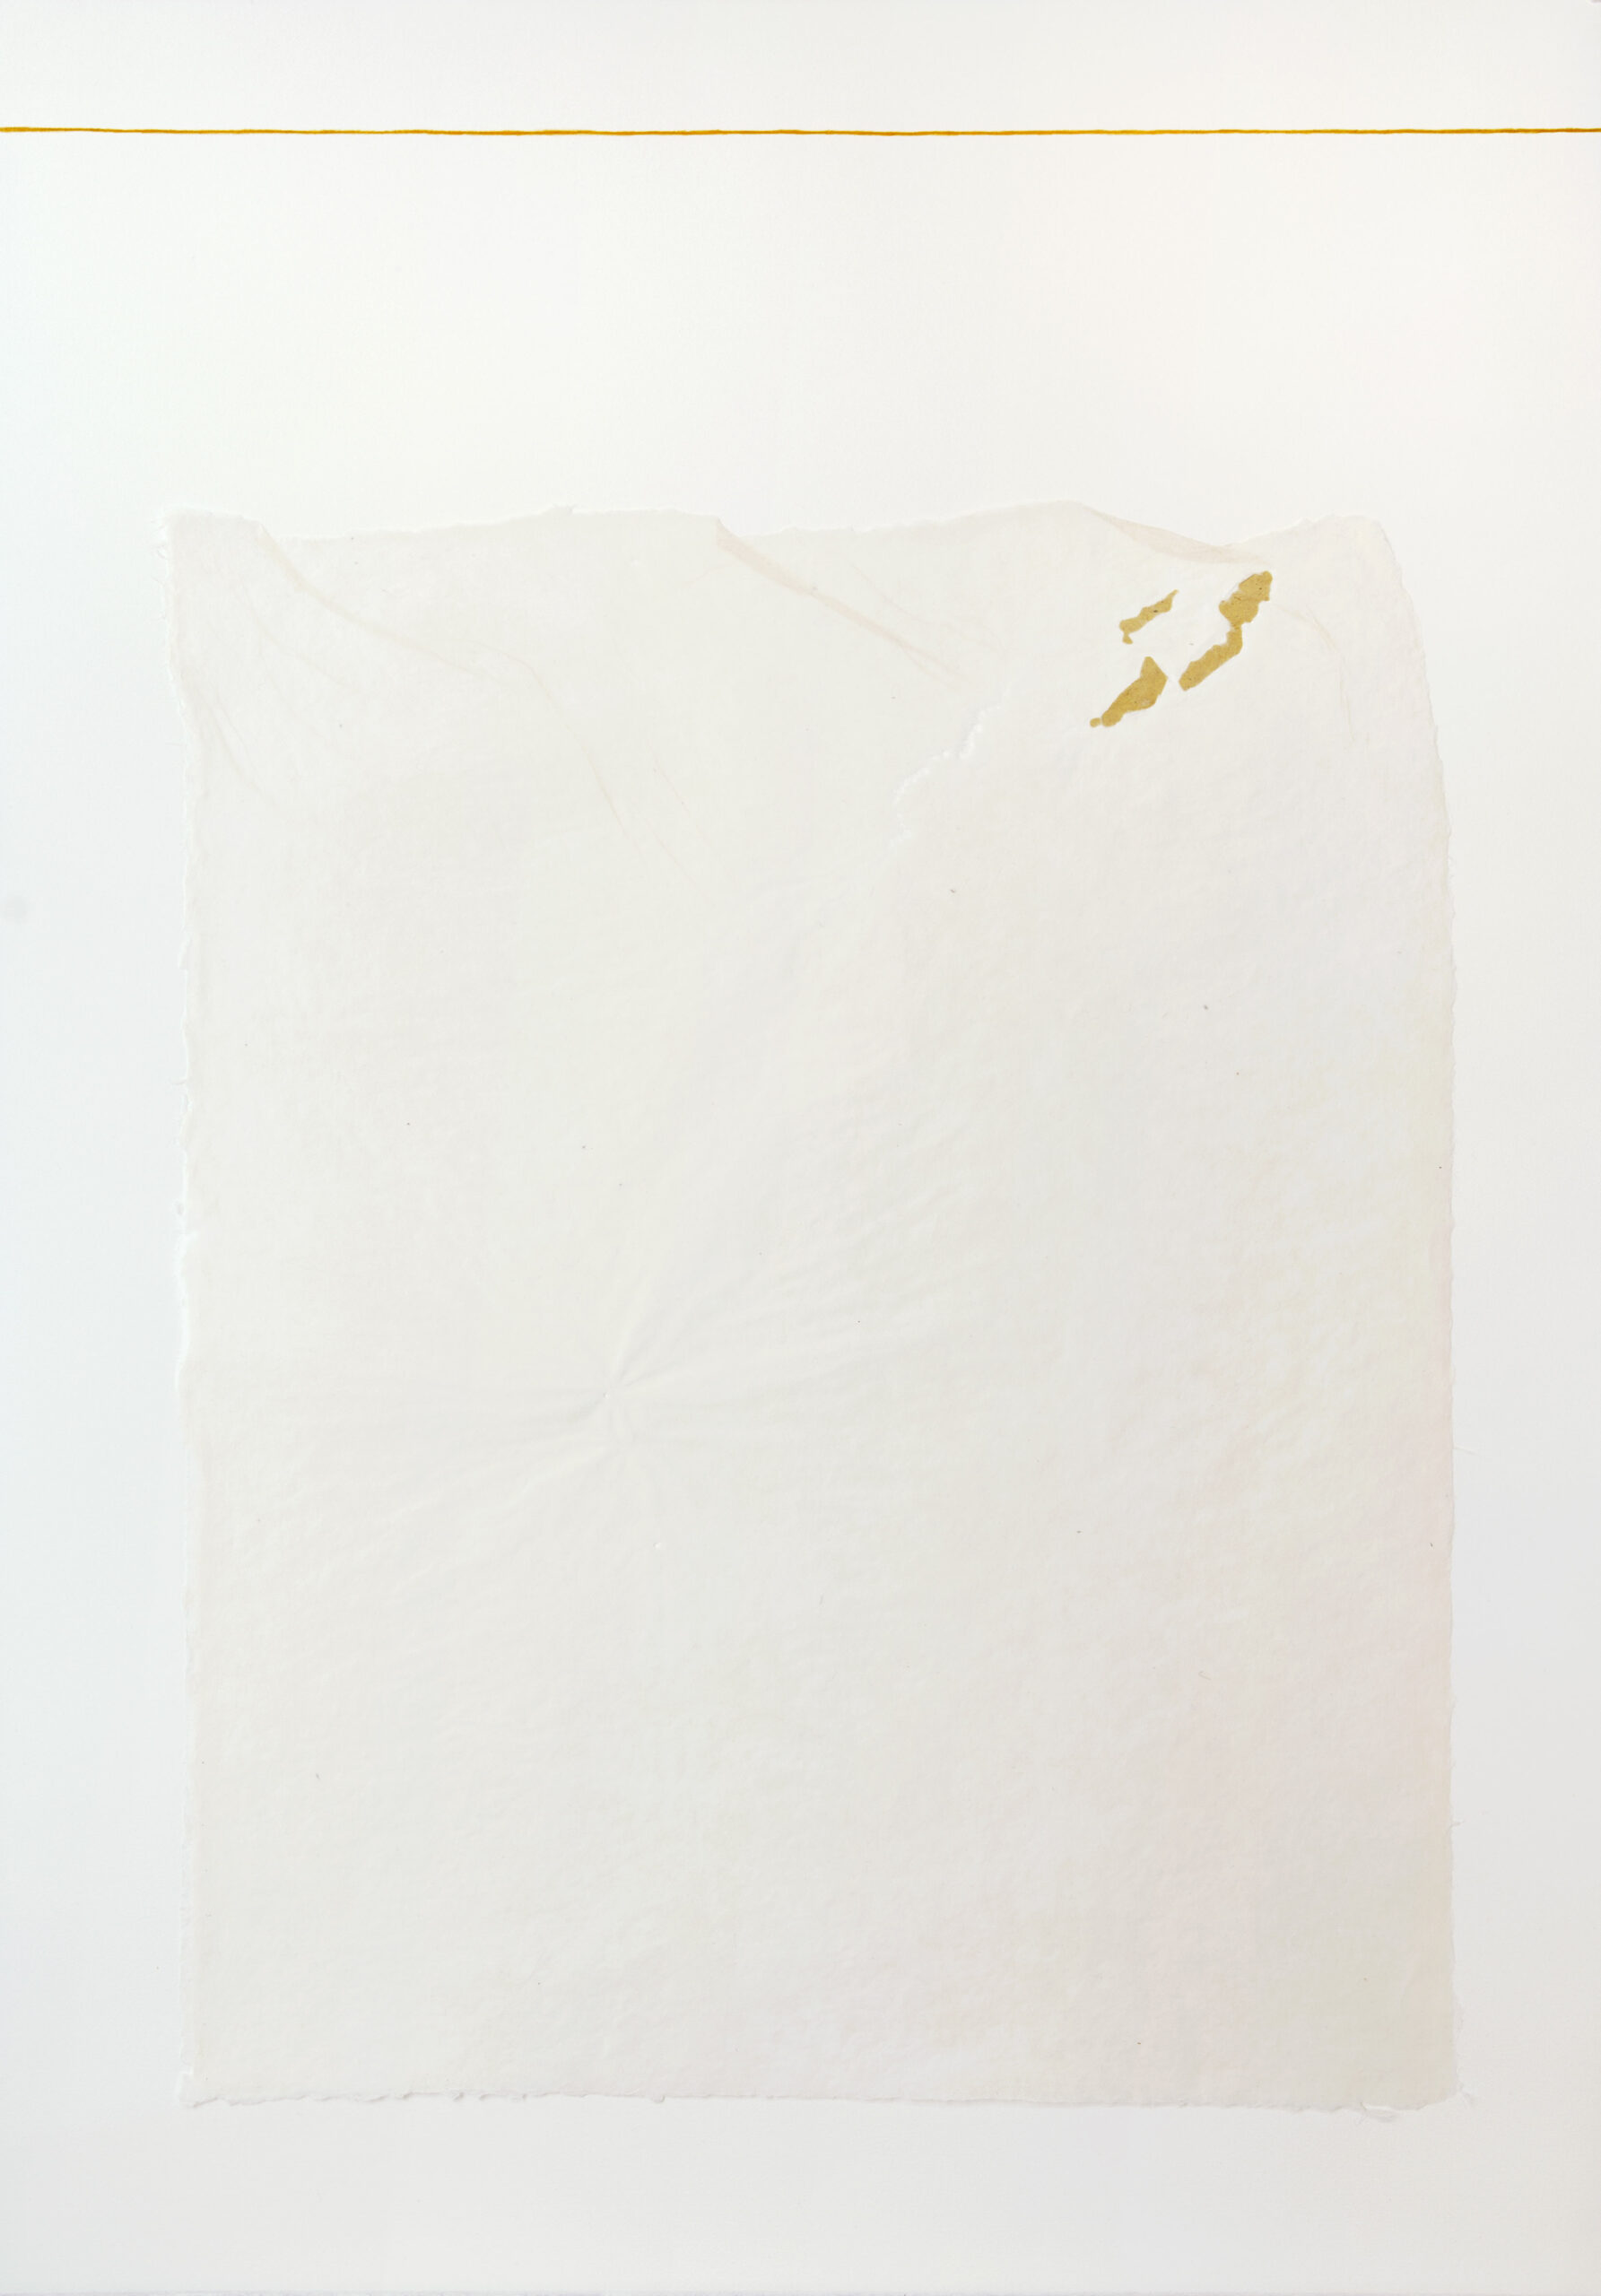 Miriam Salamander, paperwork, collage, yelloe pencil drawing on white handmade abaca paper